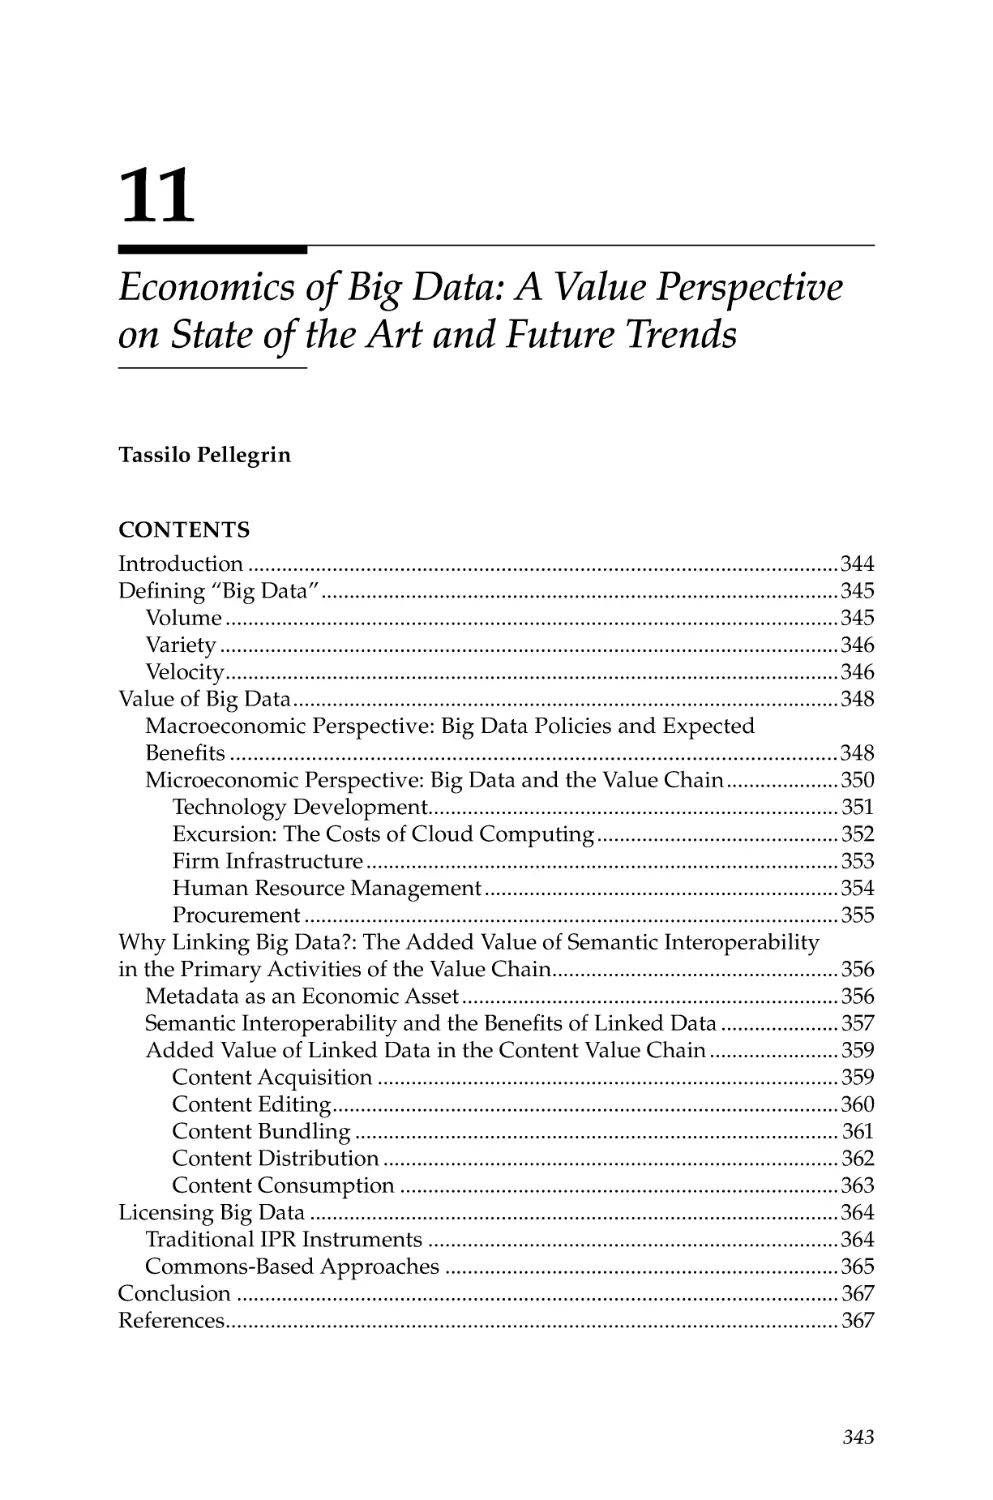 11. Economics of Big Data